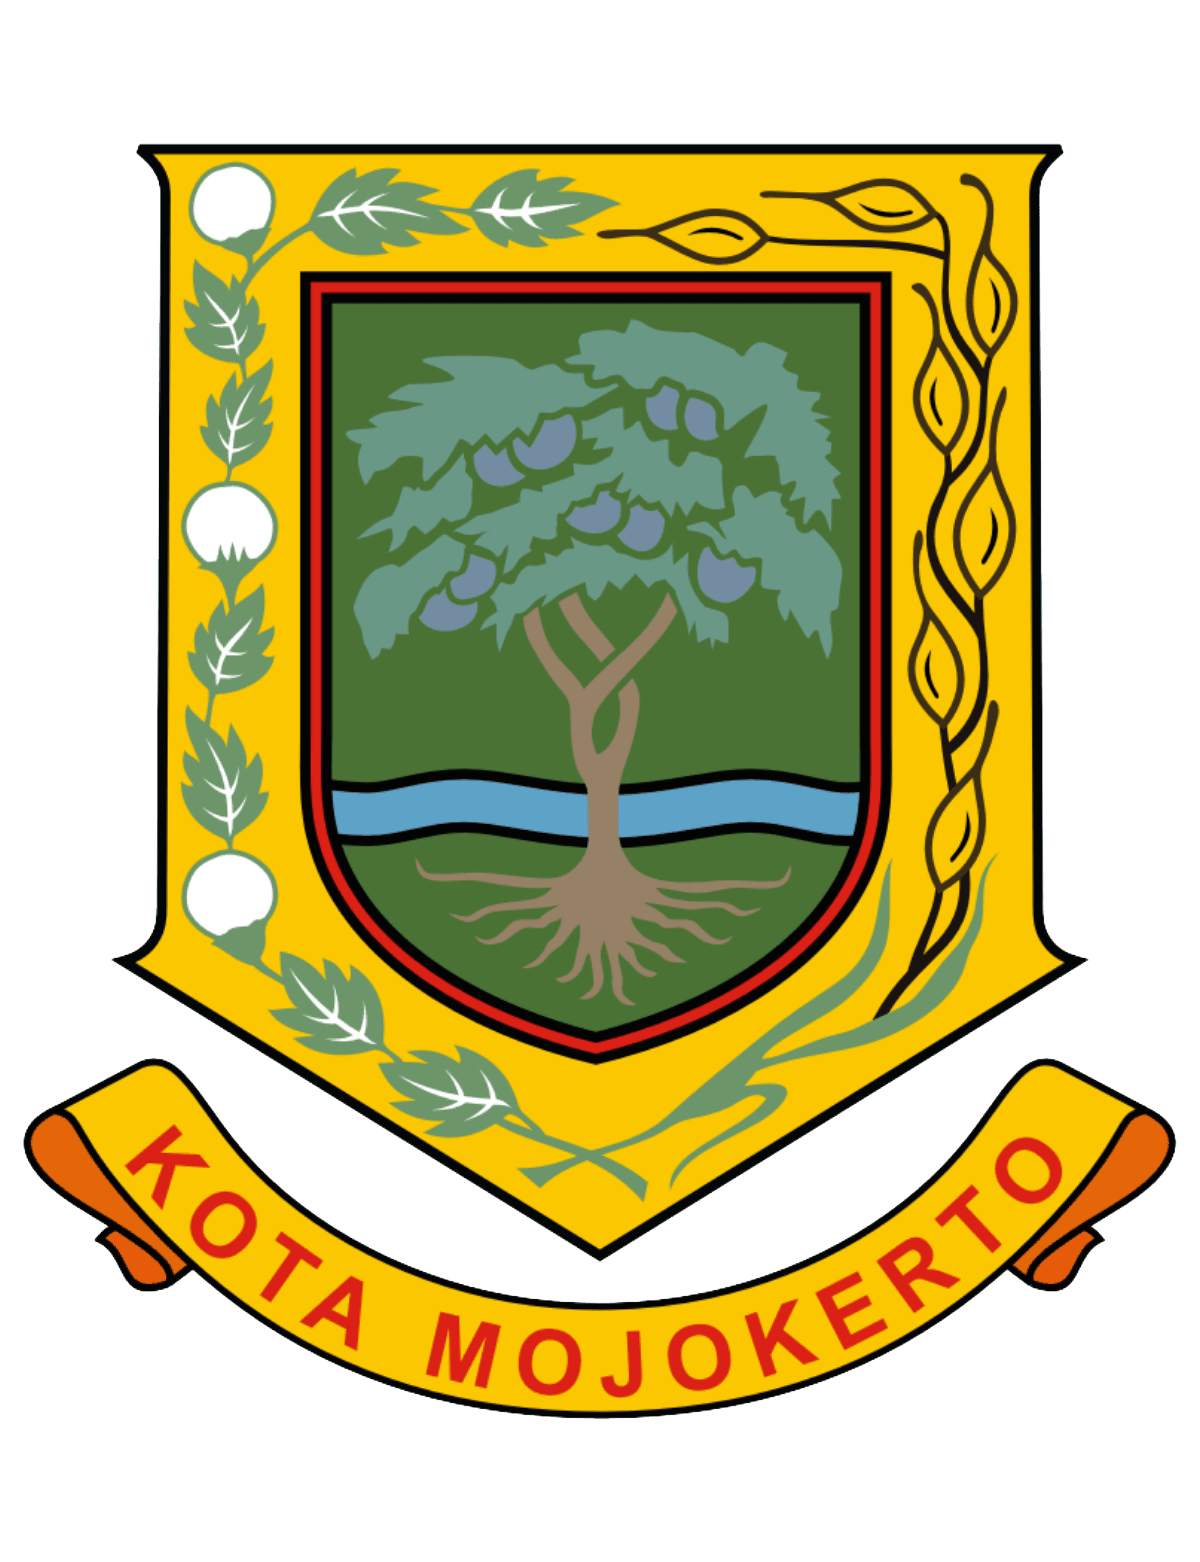 Kota Mojokerto